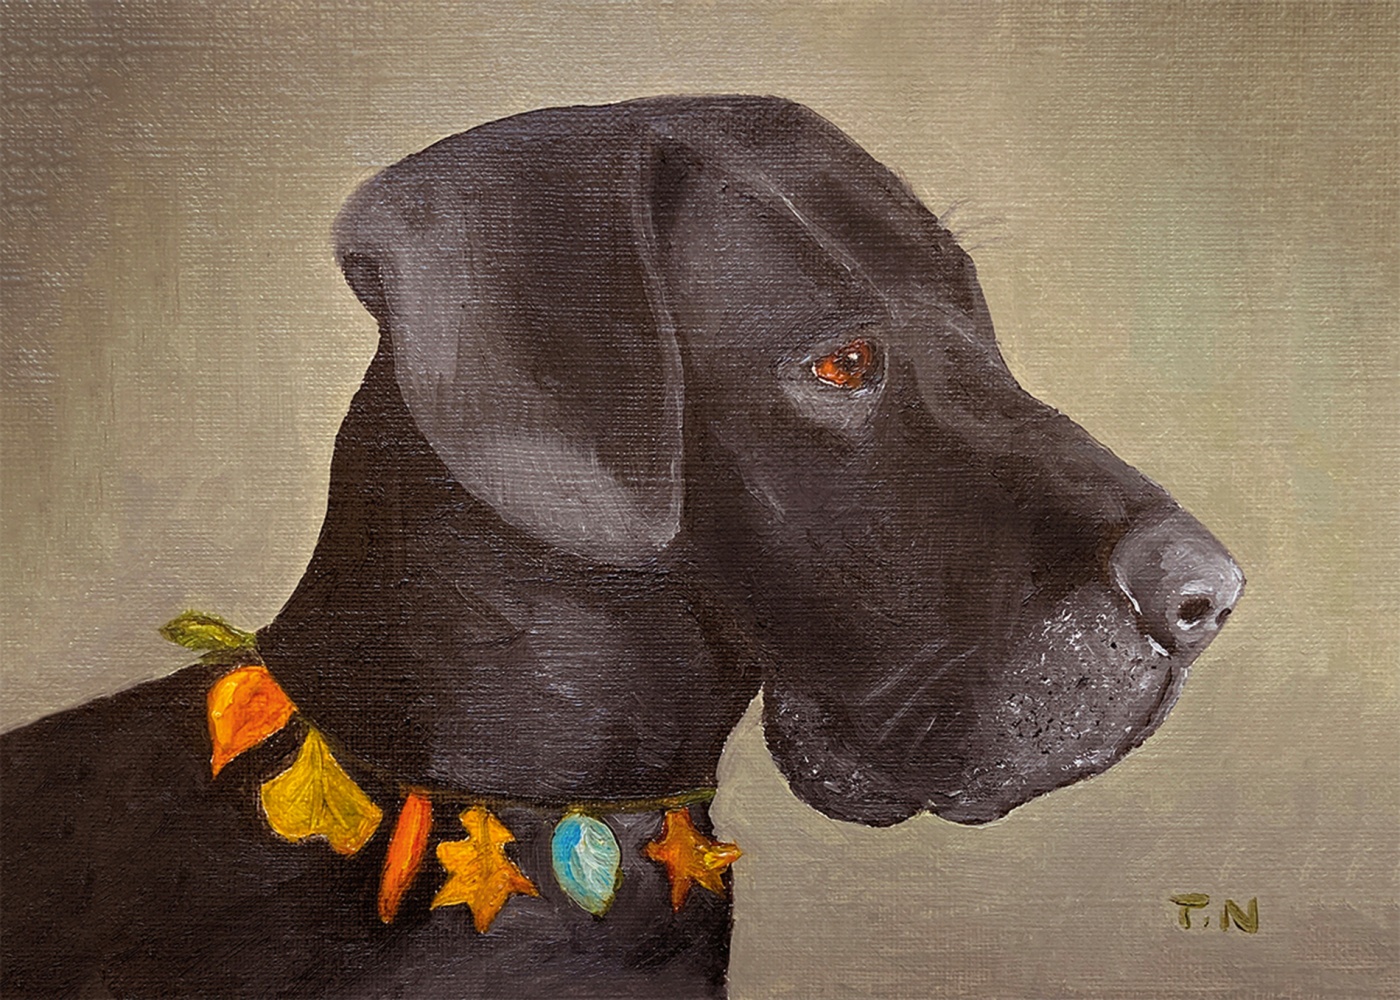 painted portrait of a black dog